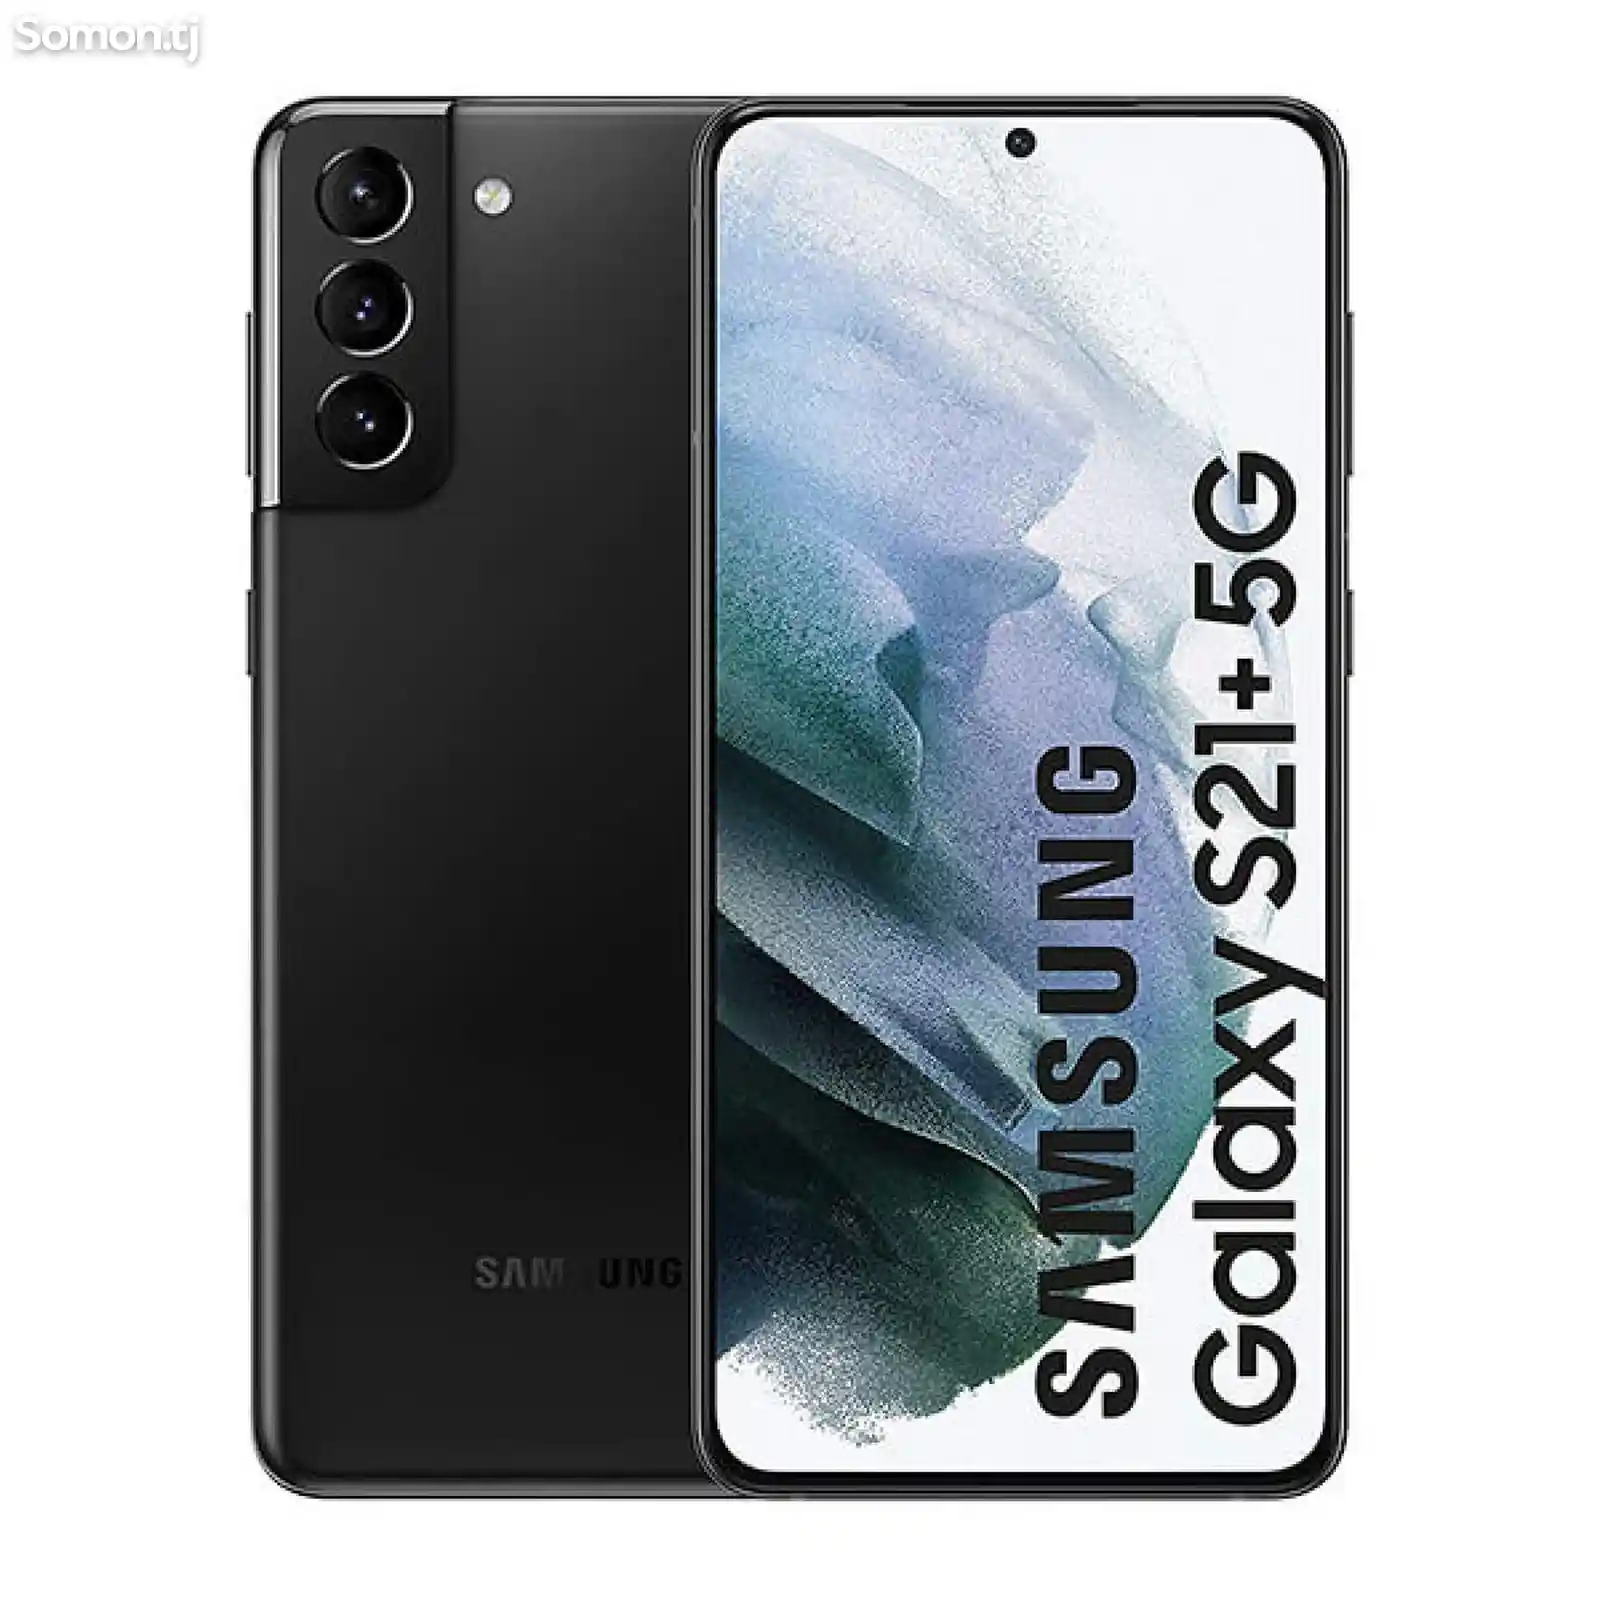 Samsung Galaxy S21+ 8/128gb duos Black-2